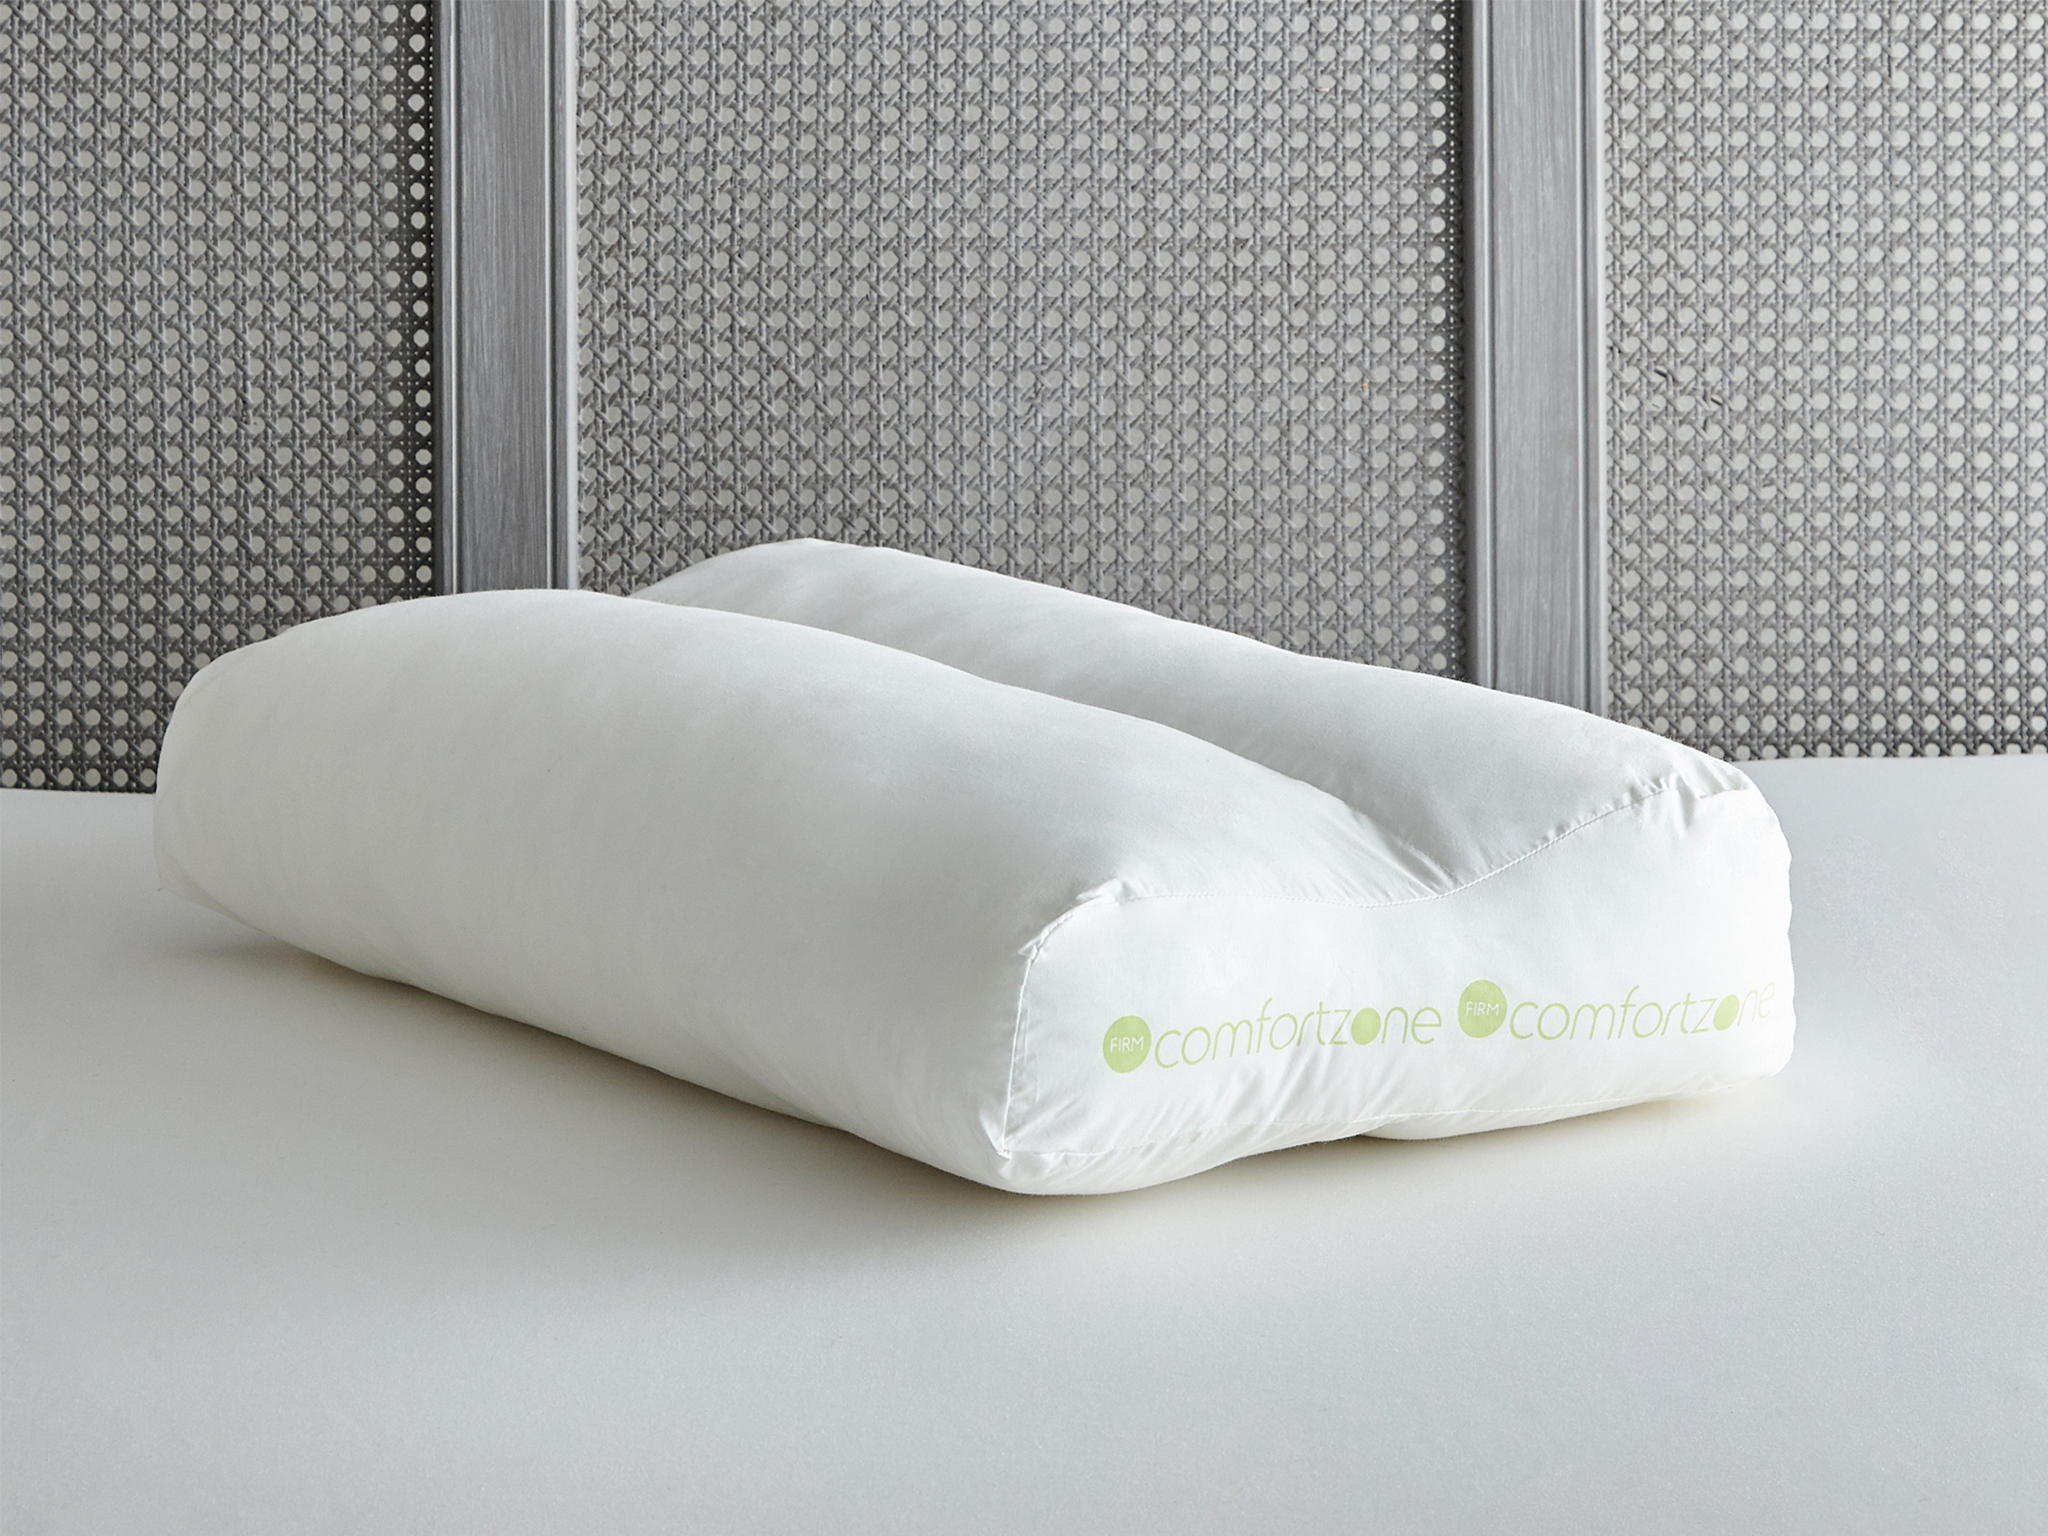 Dunelm Comfortzone contour pillow